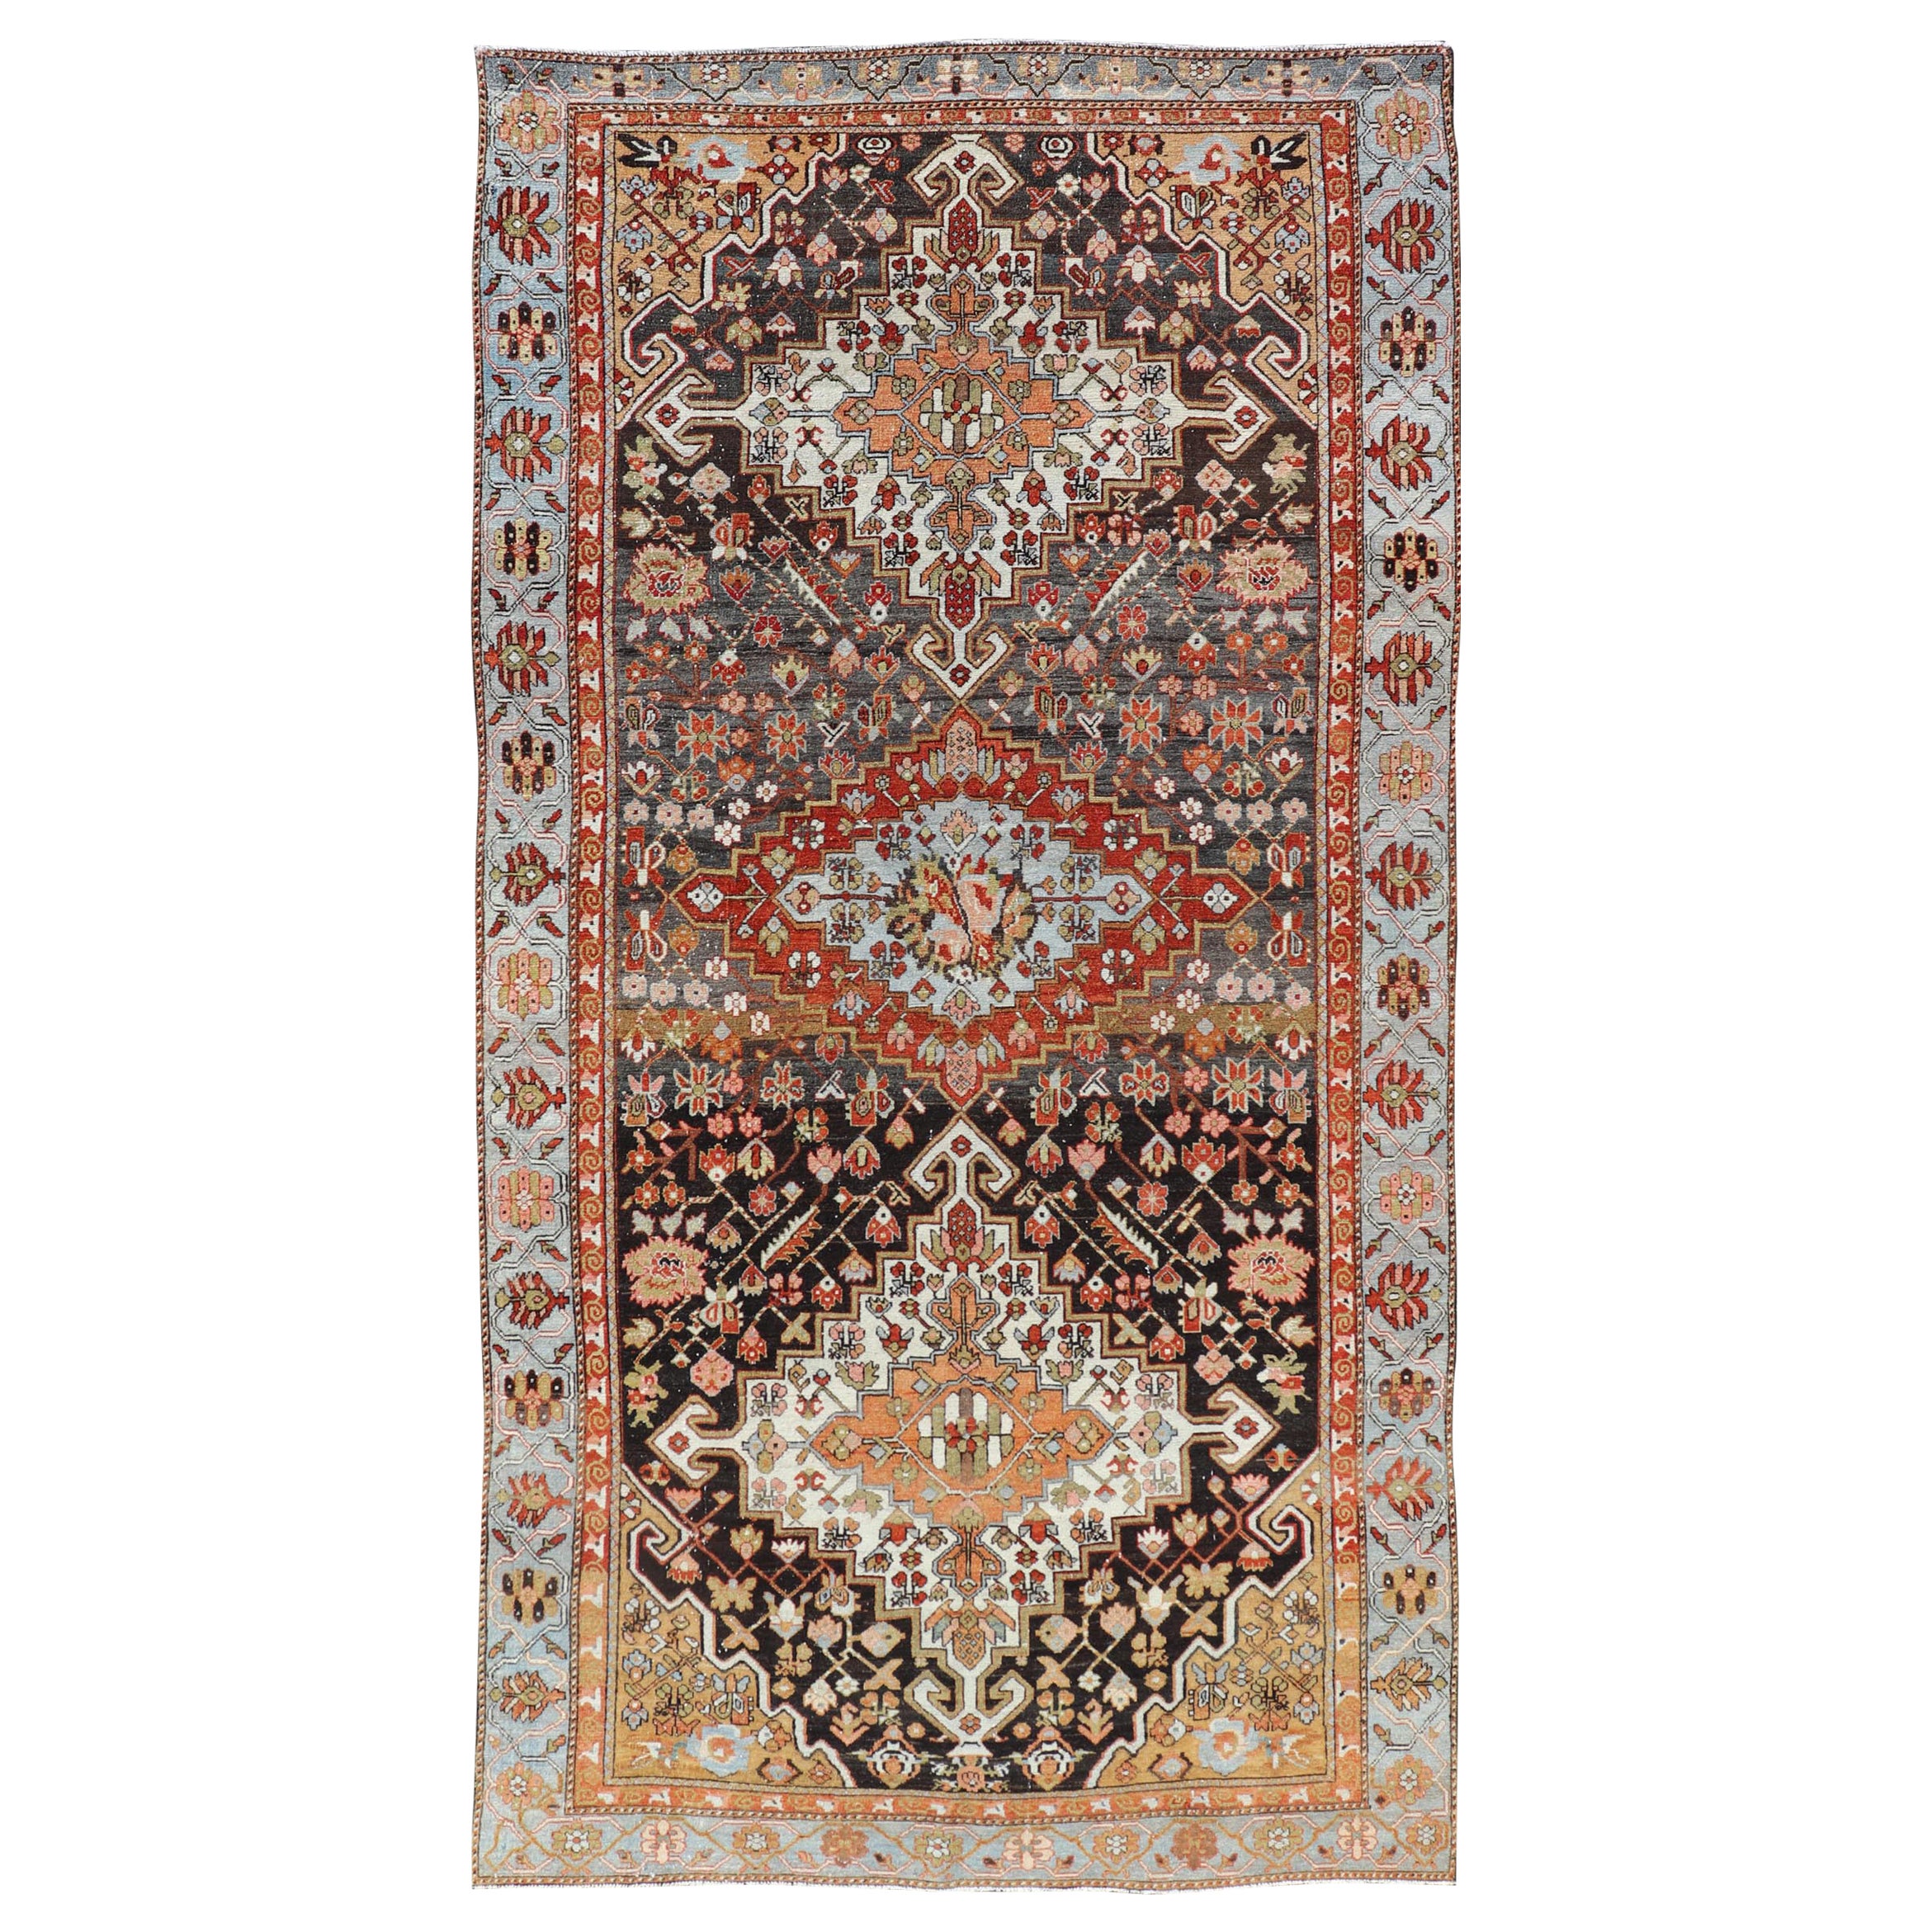 Antique Persian Tribal Design Bakhtiari Rug in Multi Colors By Keivan Woven Arts For Sale